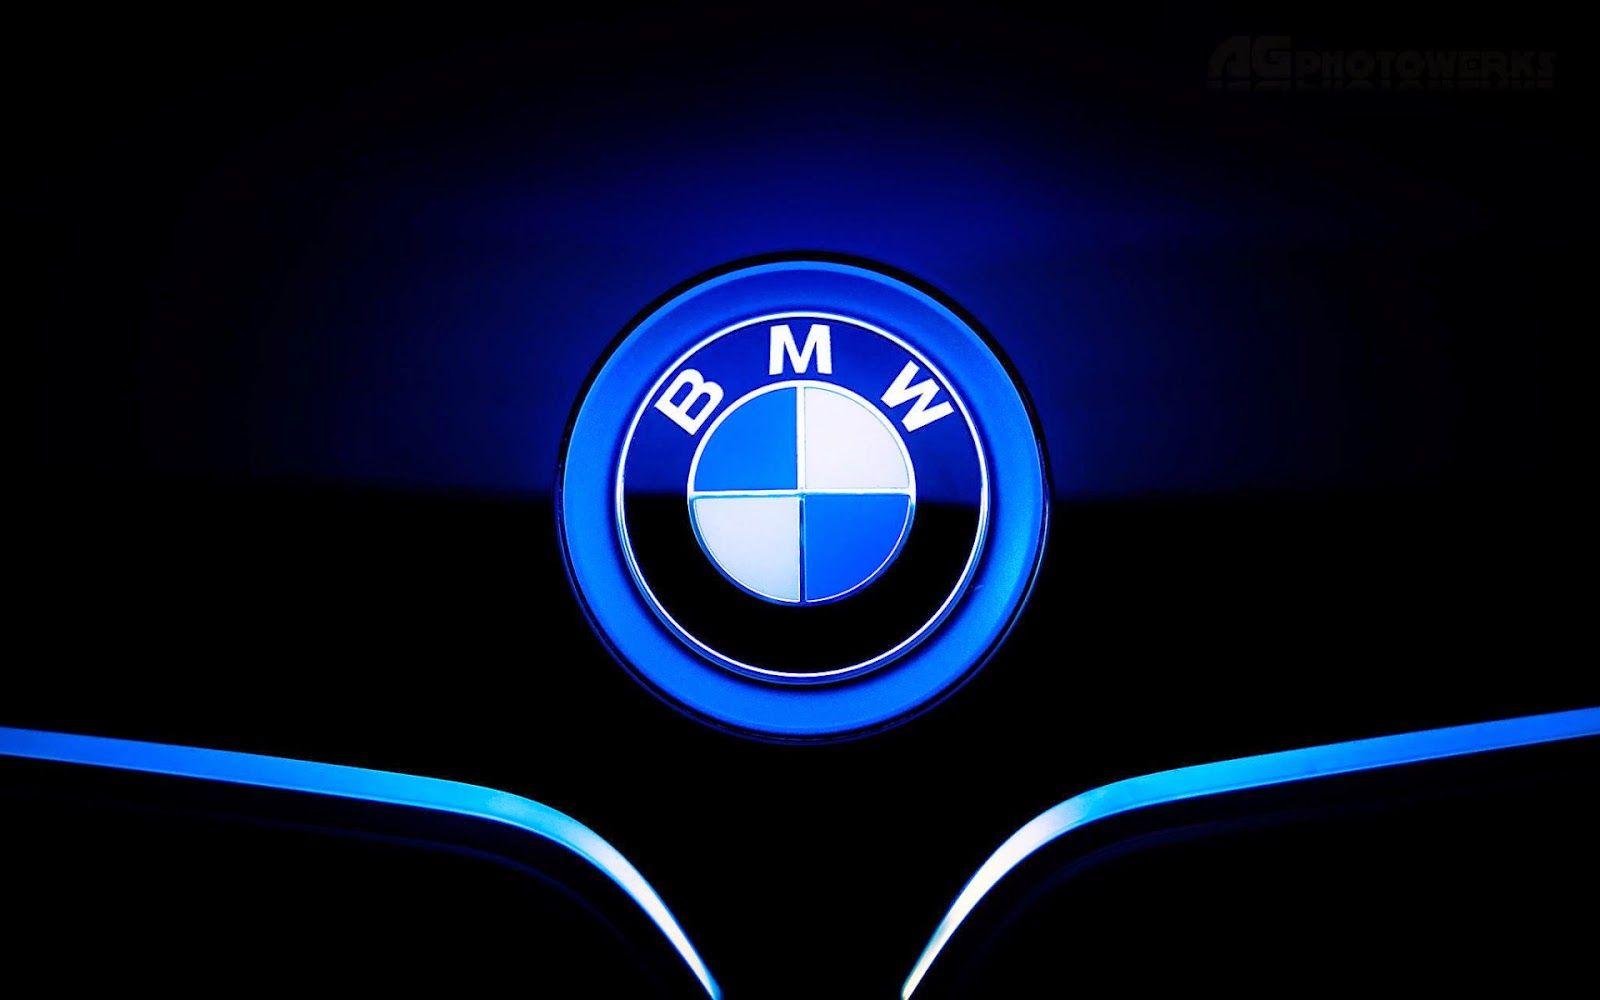 BMW Logo Wallpaper, Find best latest BMW Logo Wallpaper in HD